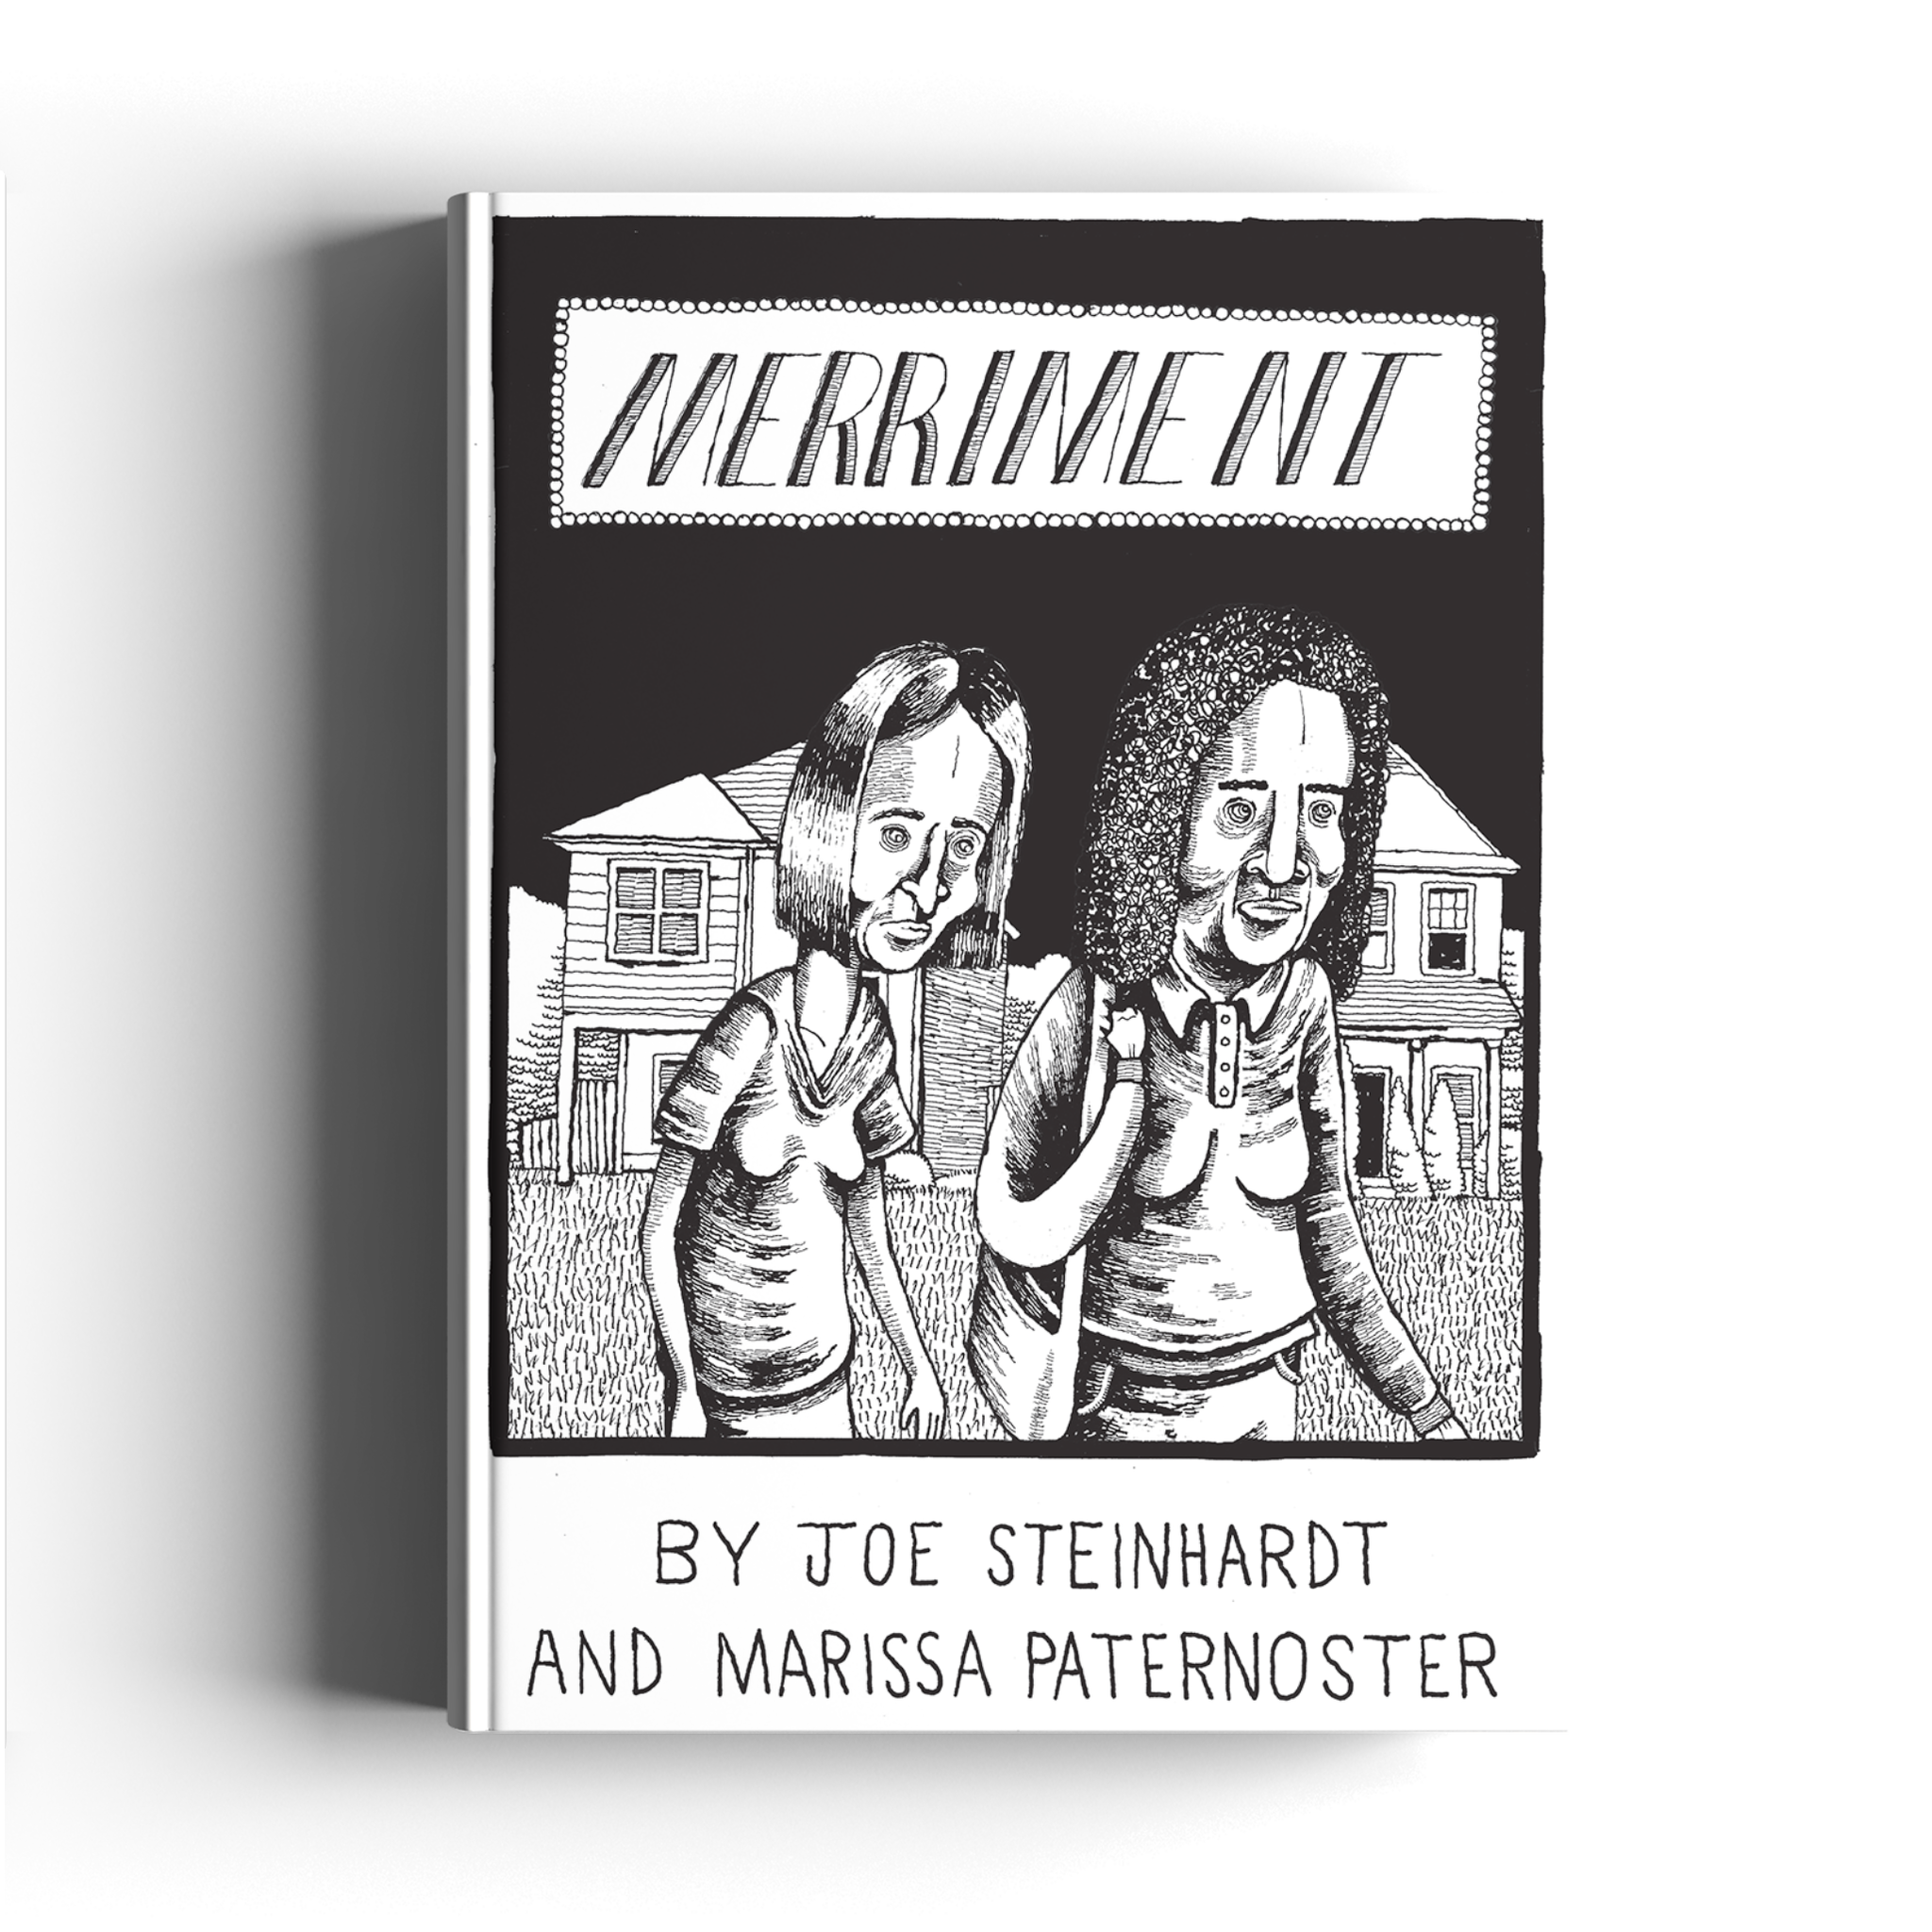 Joe Steinhardt & Marissa Paternoster "Merriment"